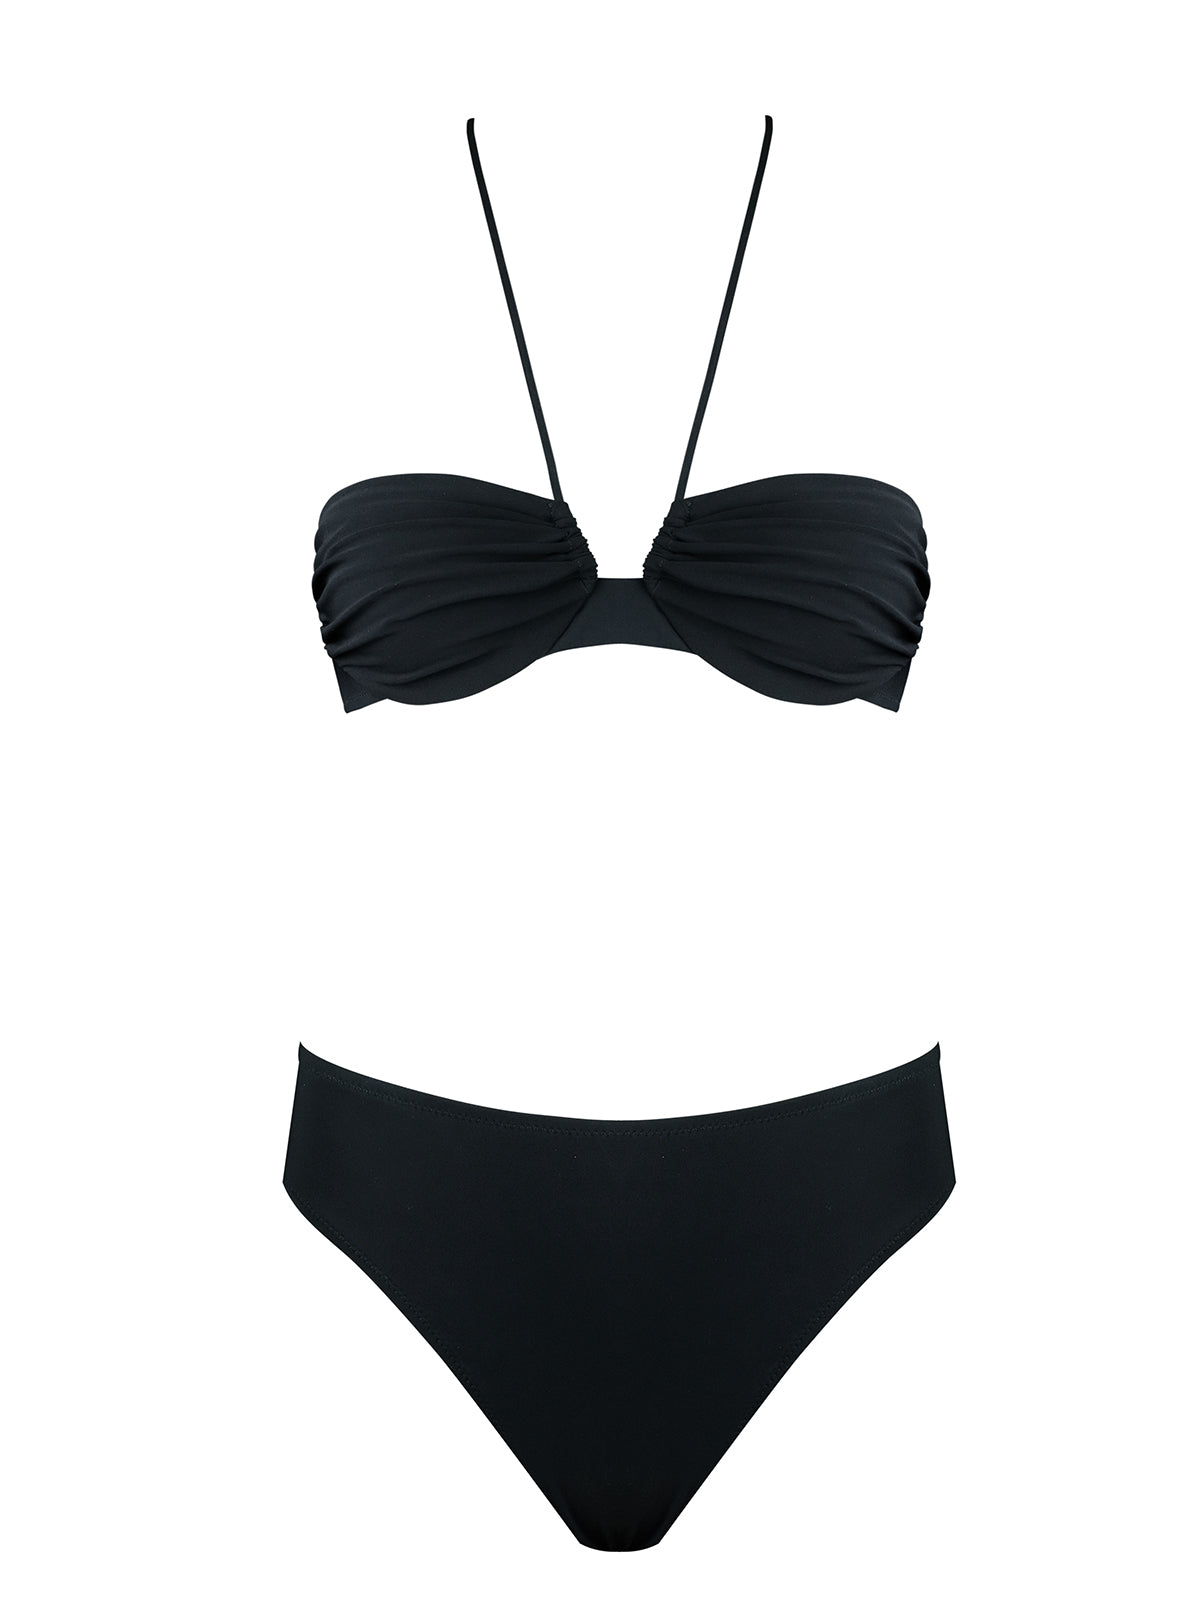 Pale Swimwear: 90's High Cut Bikini Bottom - Black